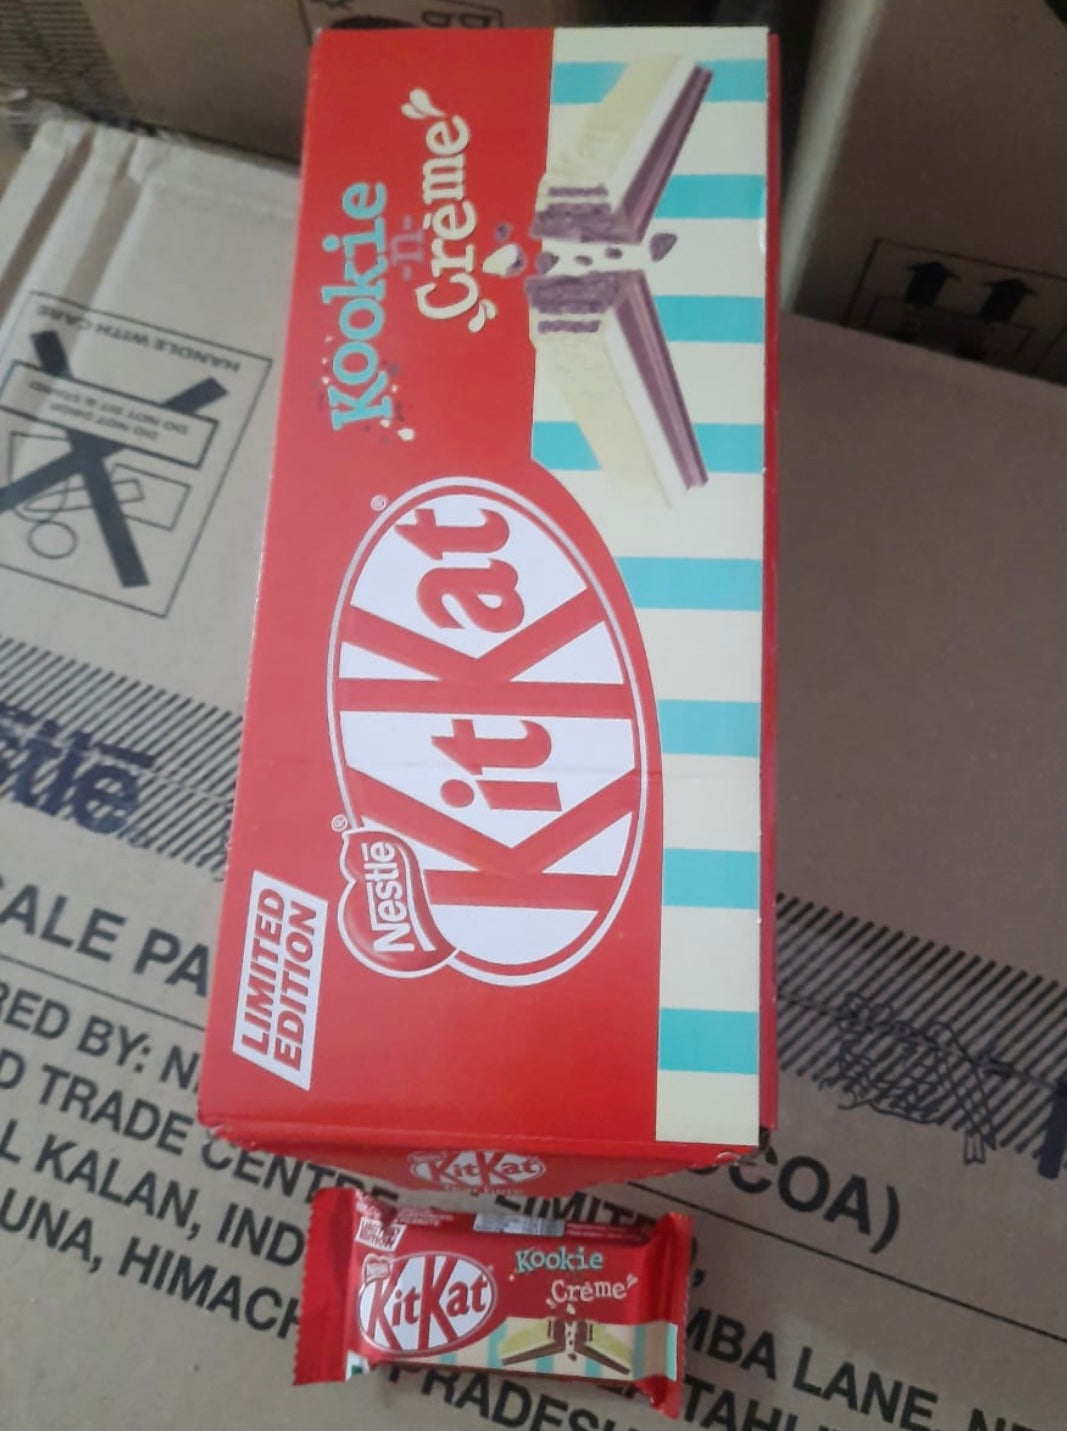 KIT KAT Kookies and Creme - 13g (India)